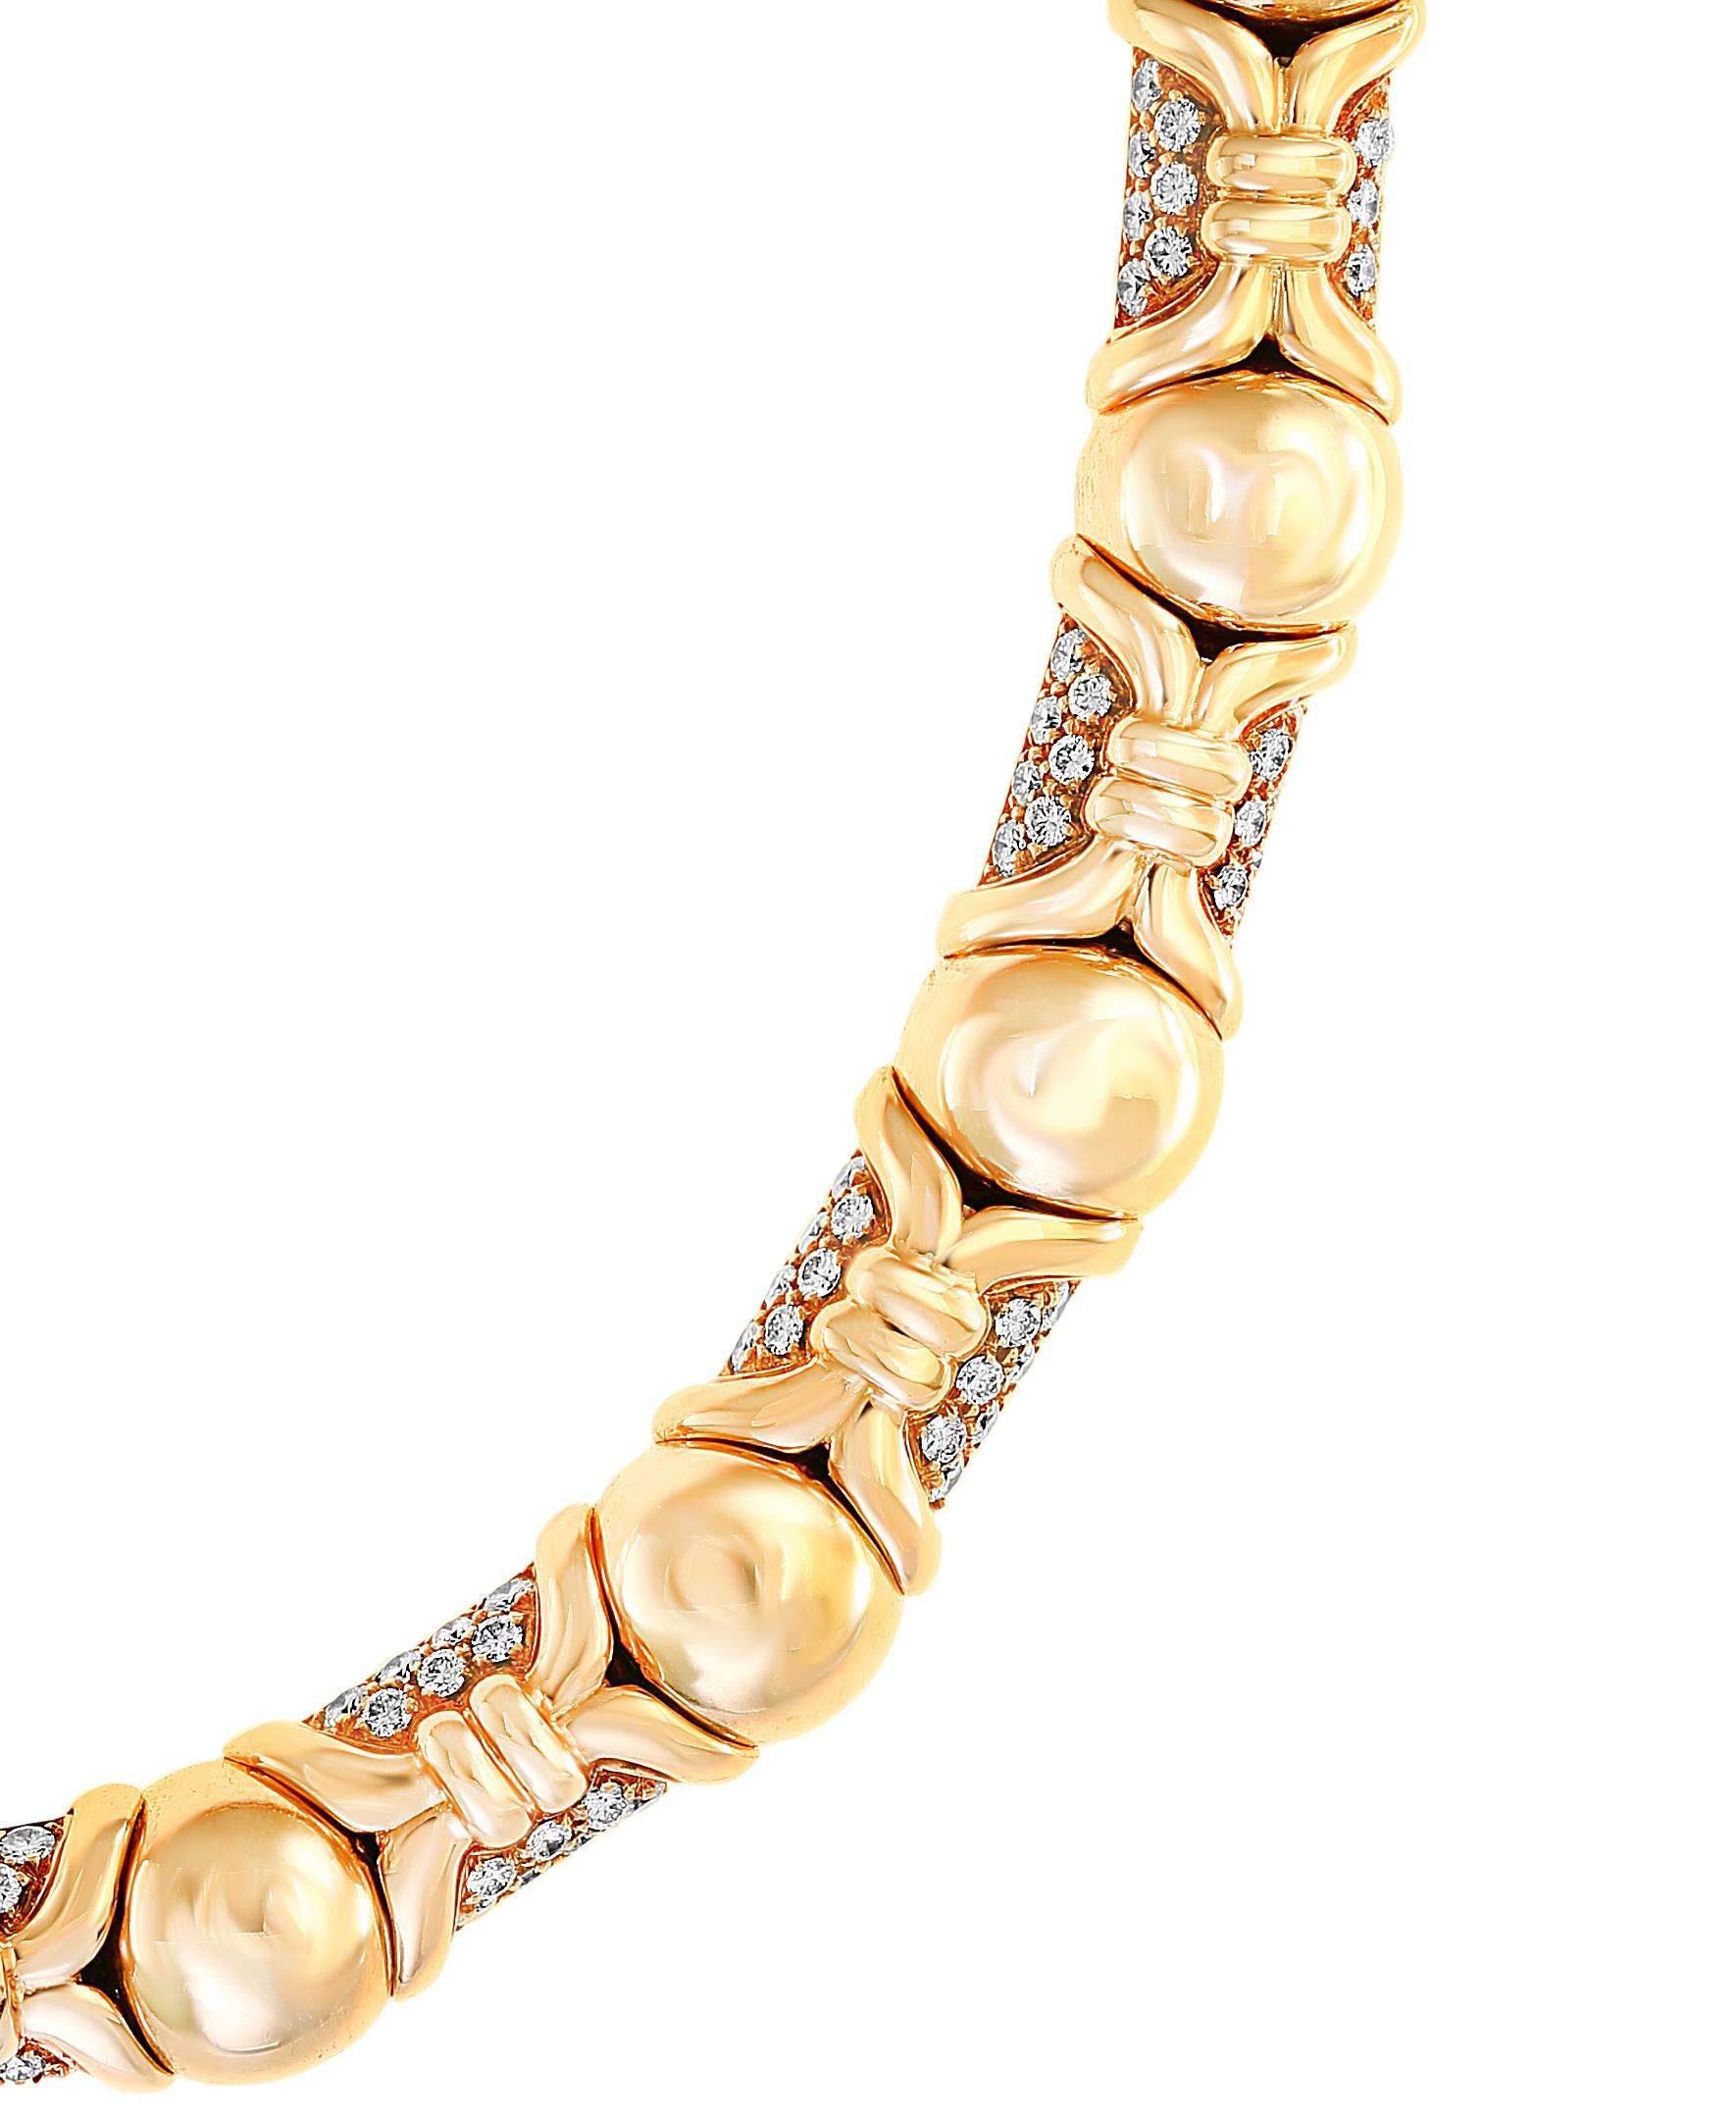 Bulgari Suite Necklace and Earrings in 18 Karat Gold and 12 Carat Diamonds 4